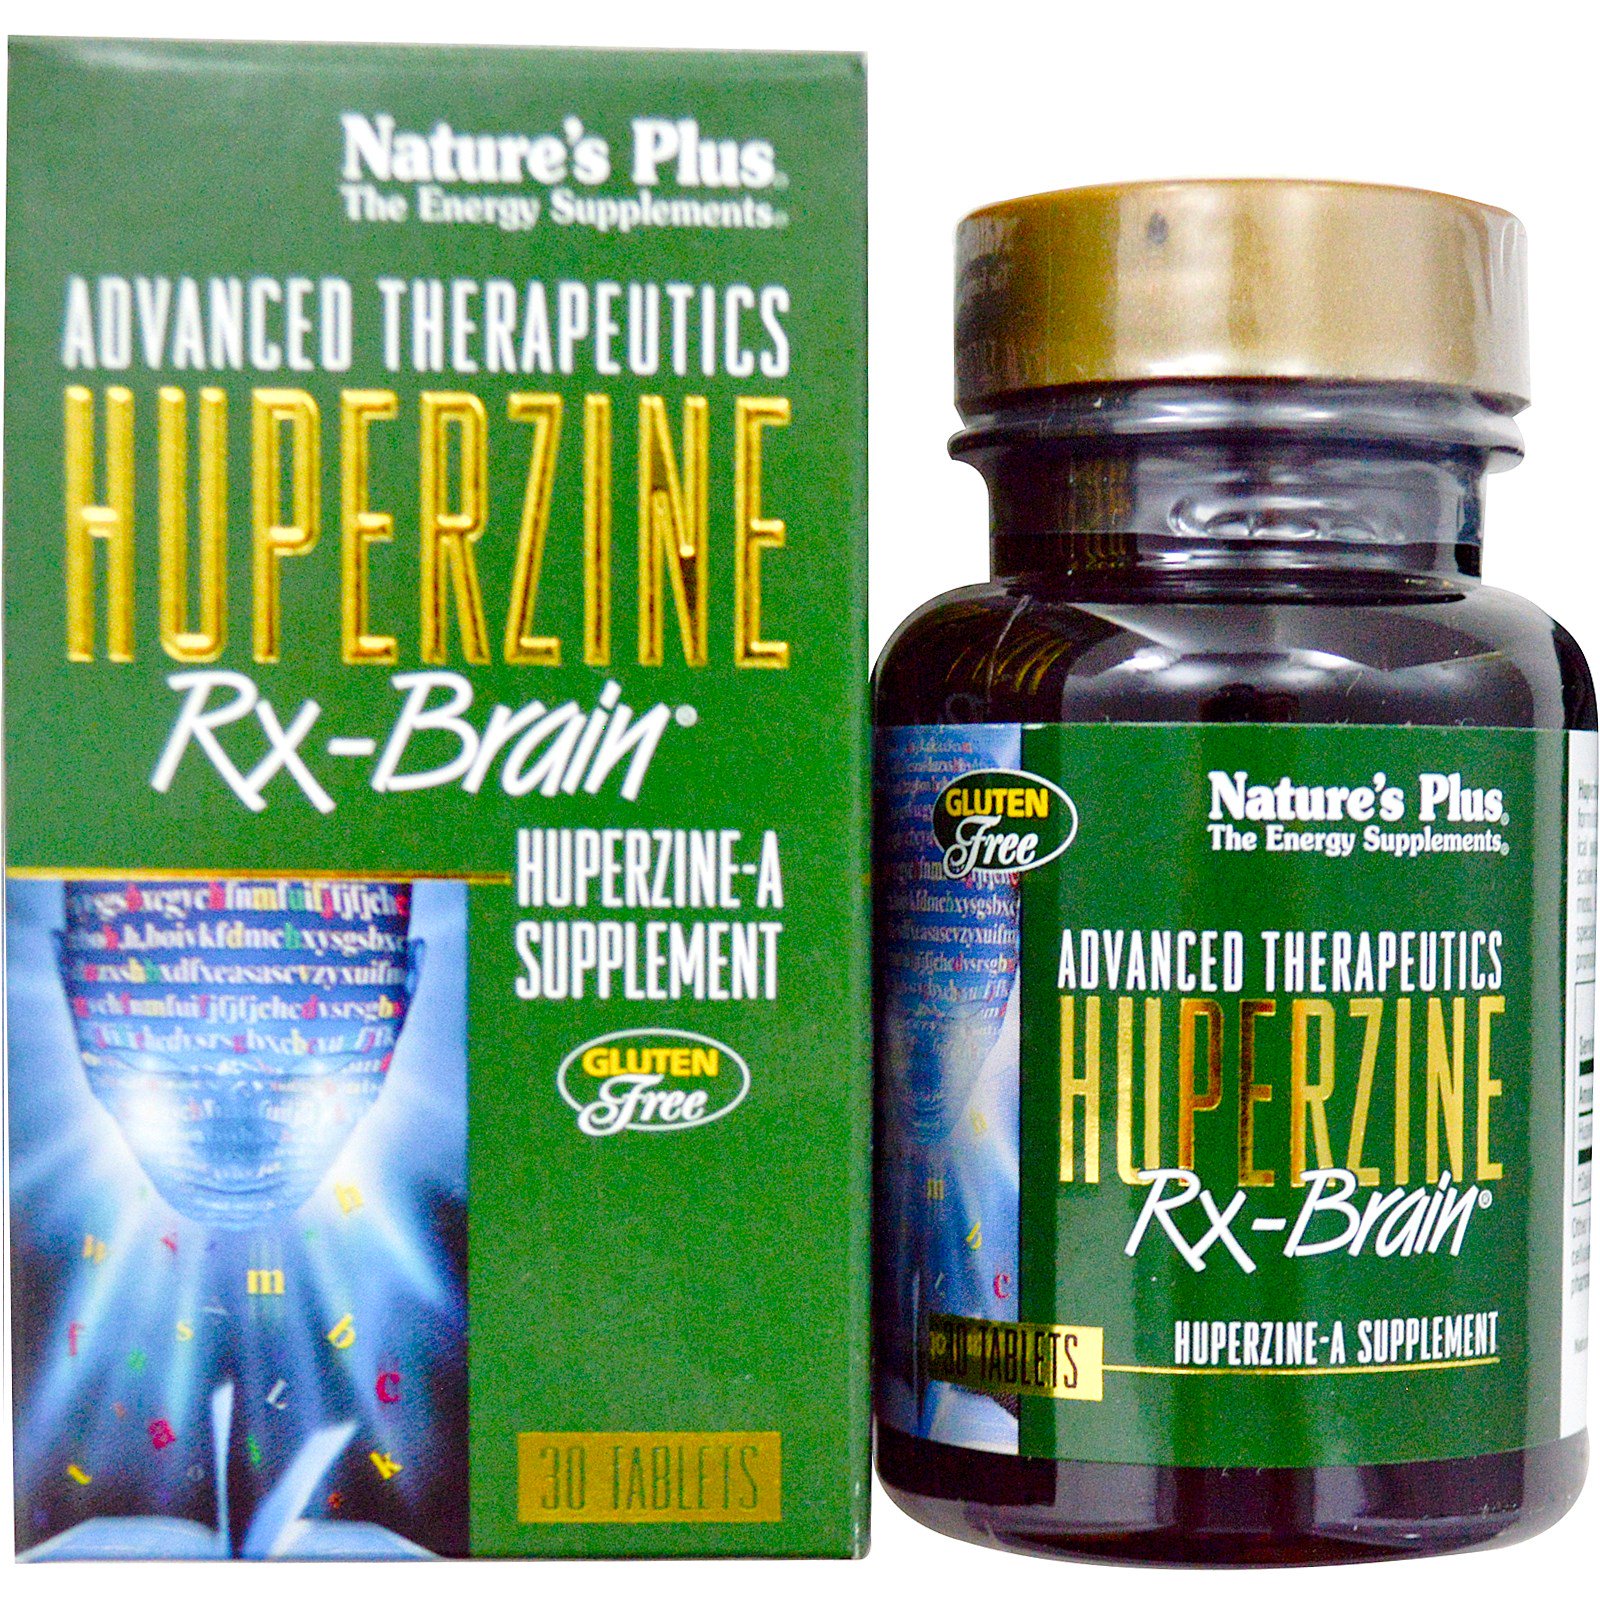 Nature's Plus, Advanced Therapeutics, Гуперзин-А для Работы Мозга, 30 таблеток